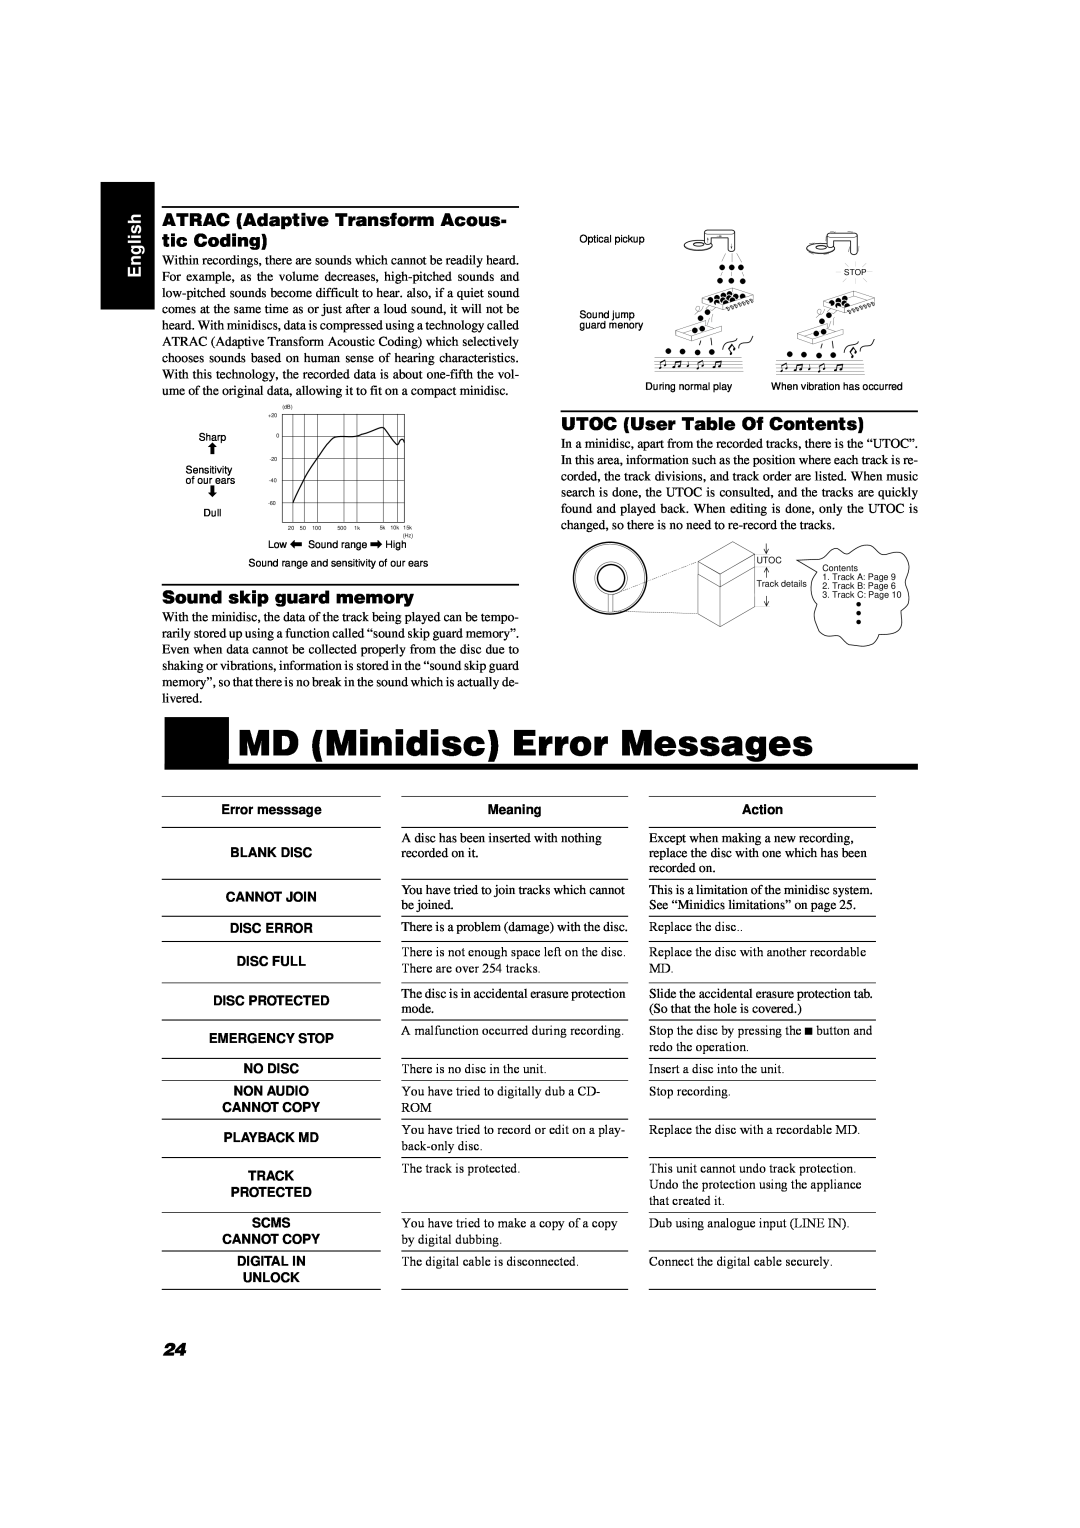 JVC UX-MD9000R MD Minidisc Error Messages, ATRAC Adaptive Transform Acous- tic Coding, Sound skip guard memory, English 